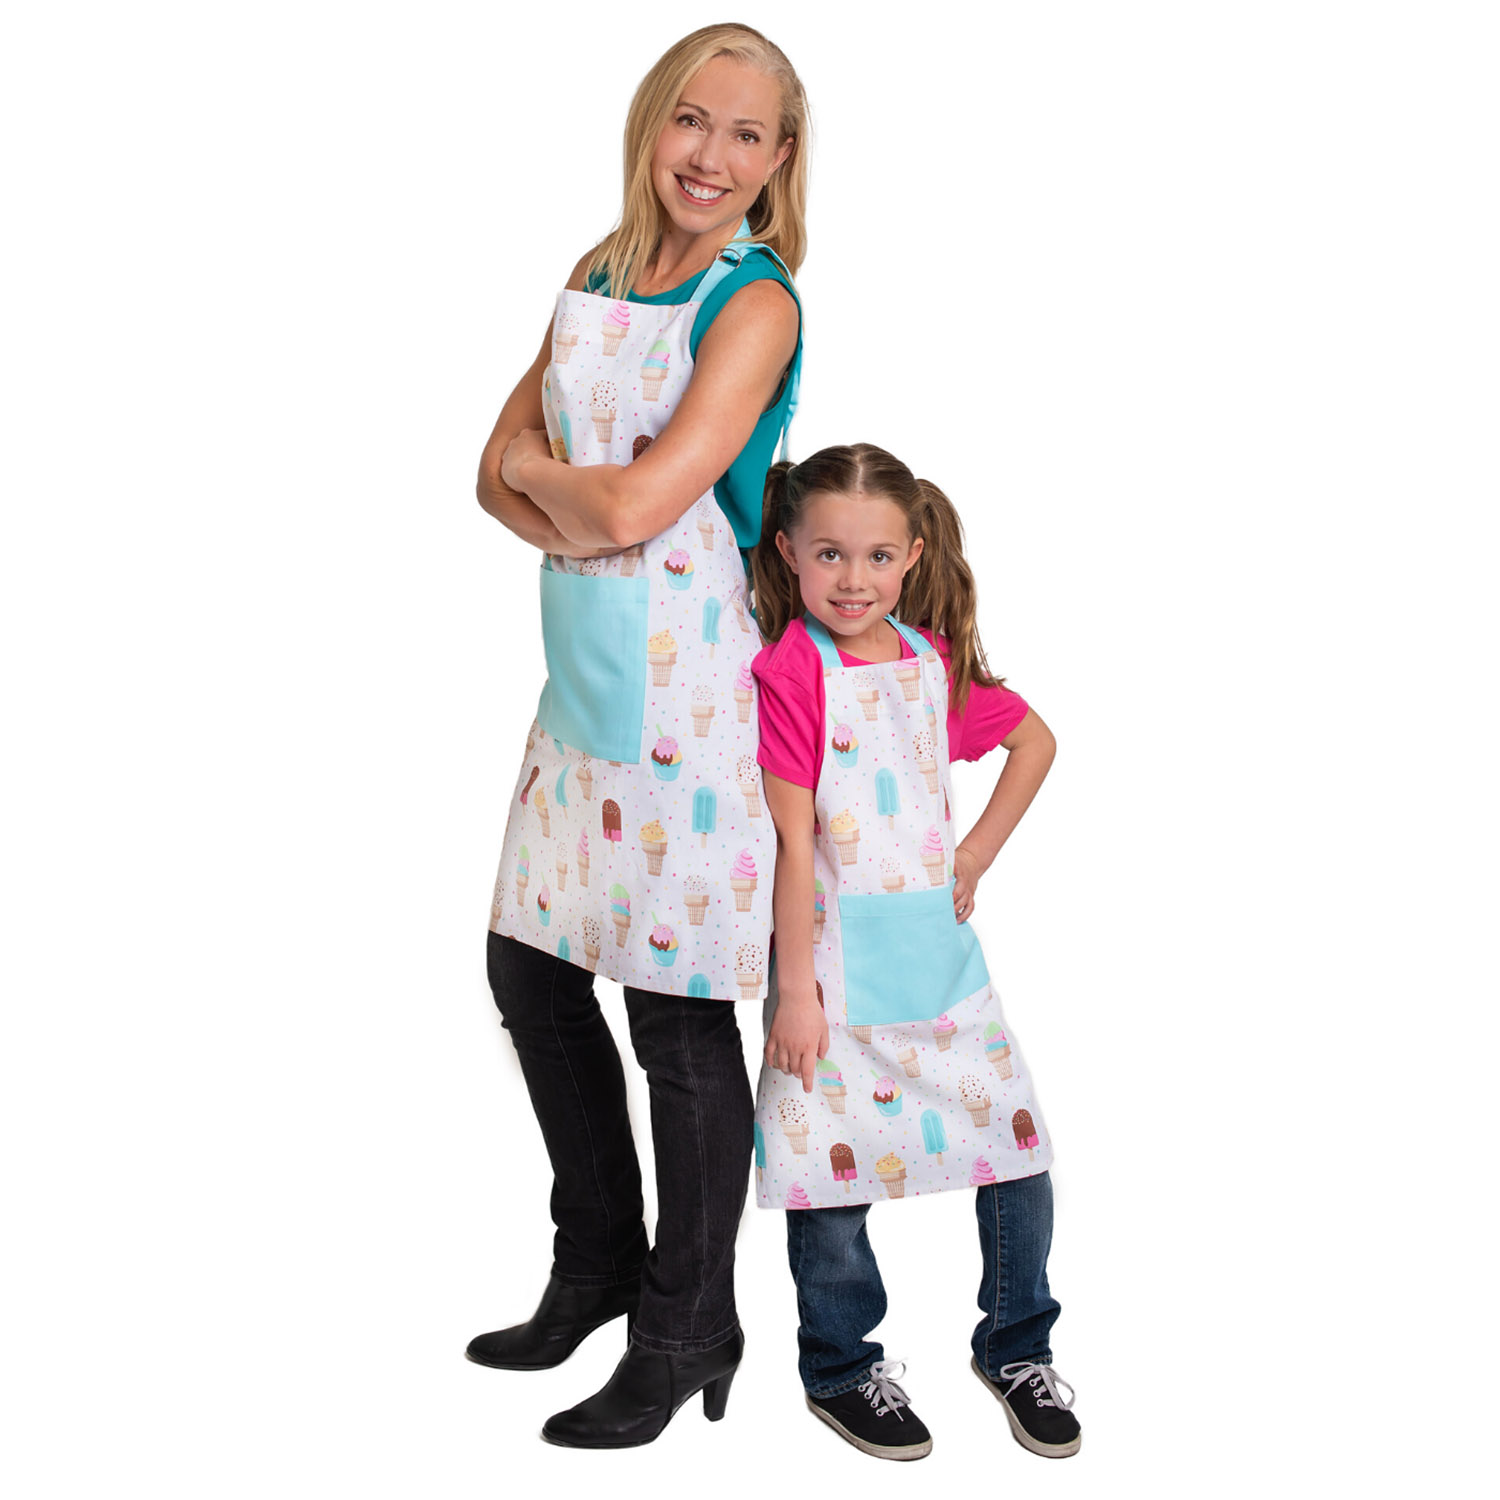 Mother & child apron set